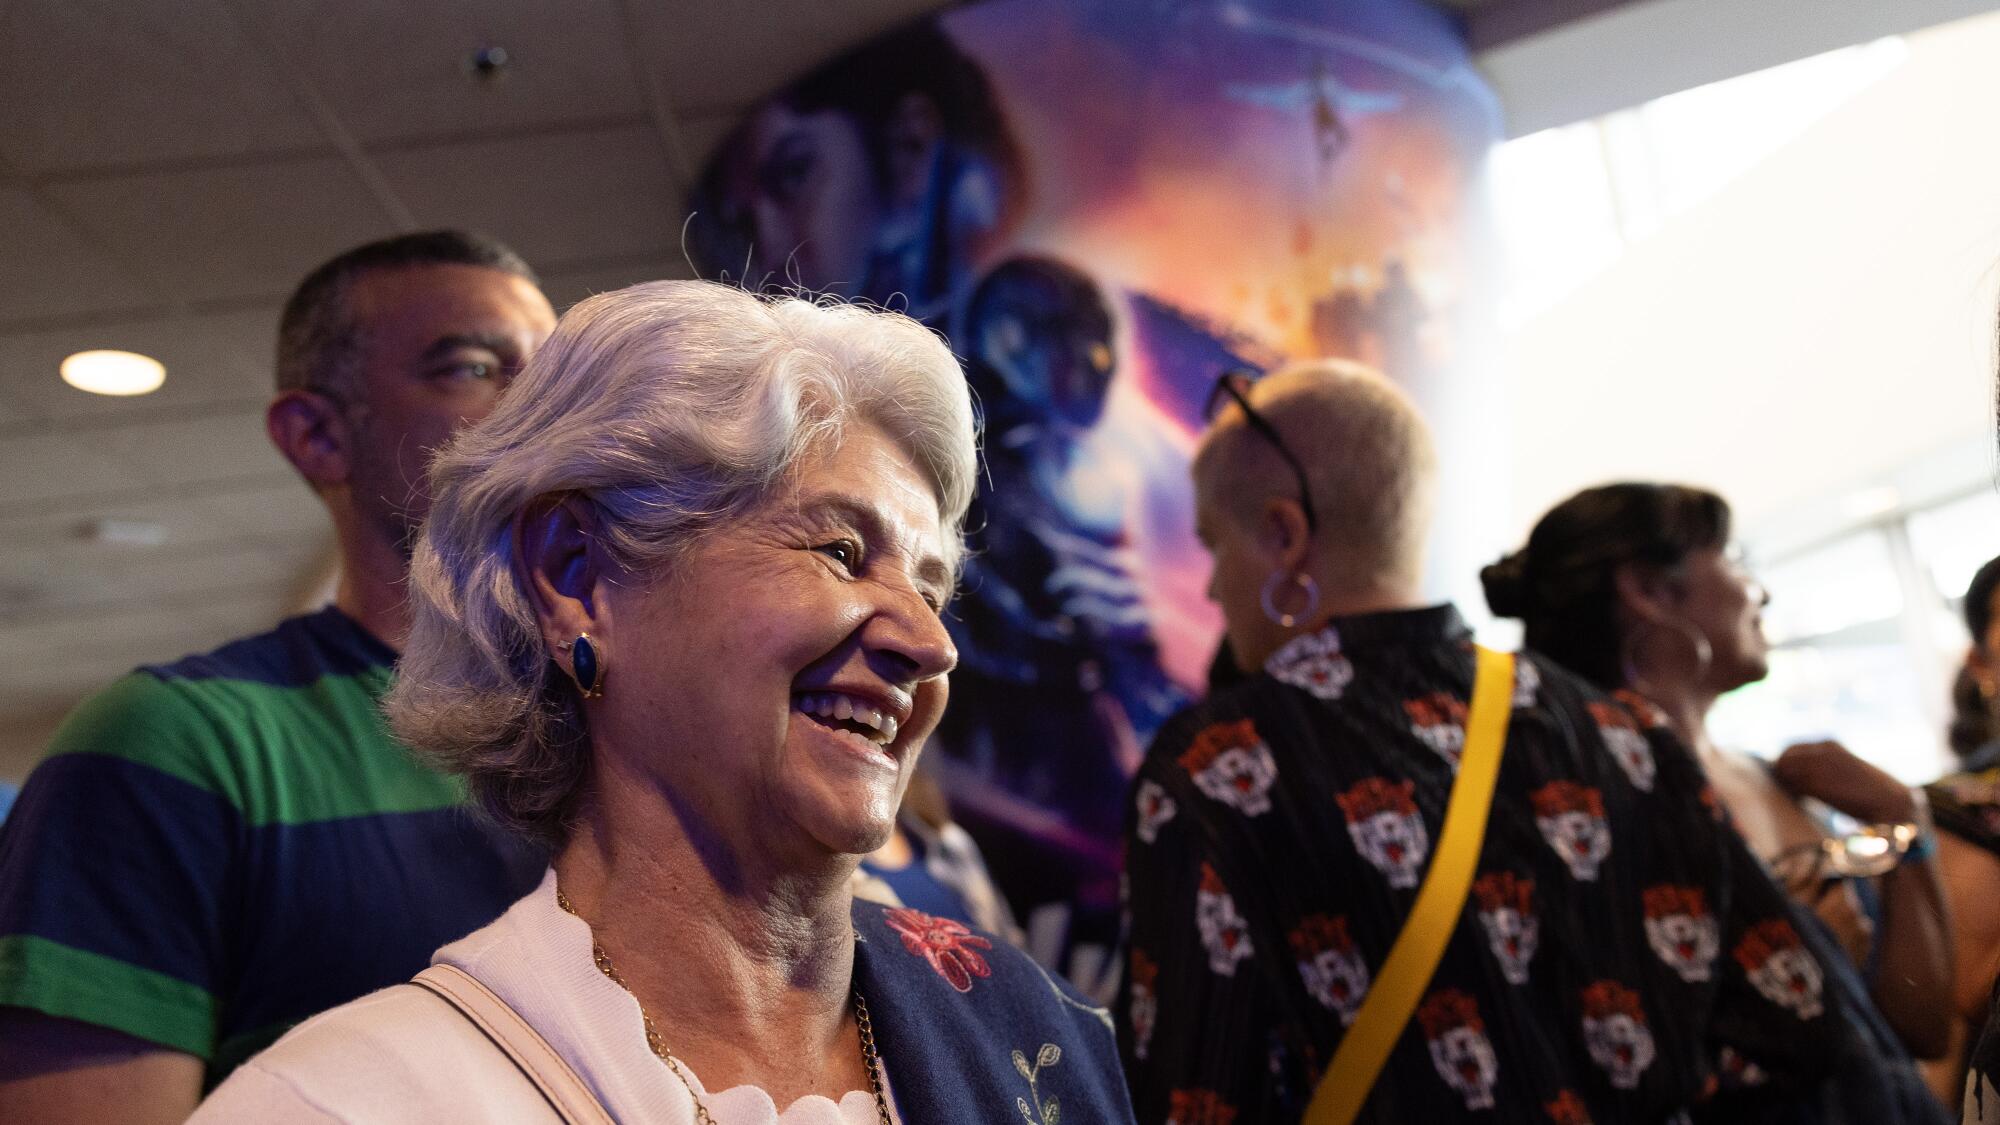 Xolo Mariduea's grandmother smiles at a movie screening.